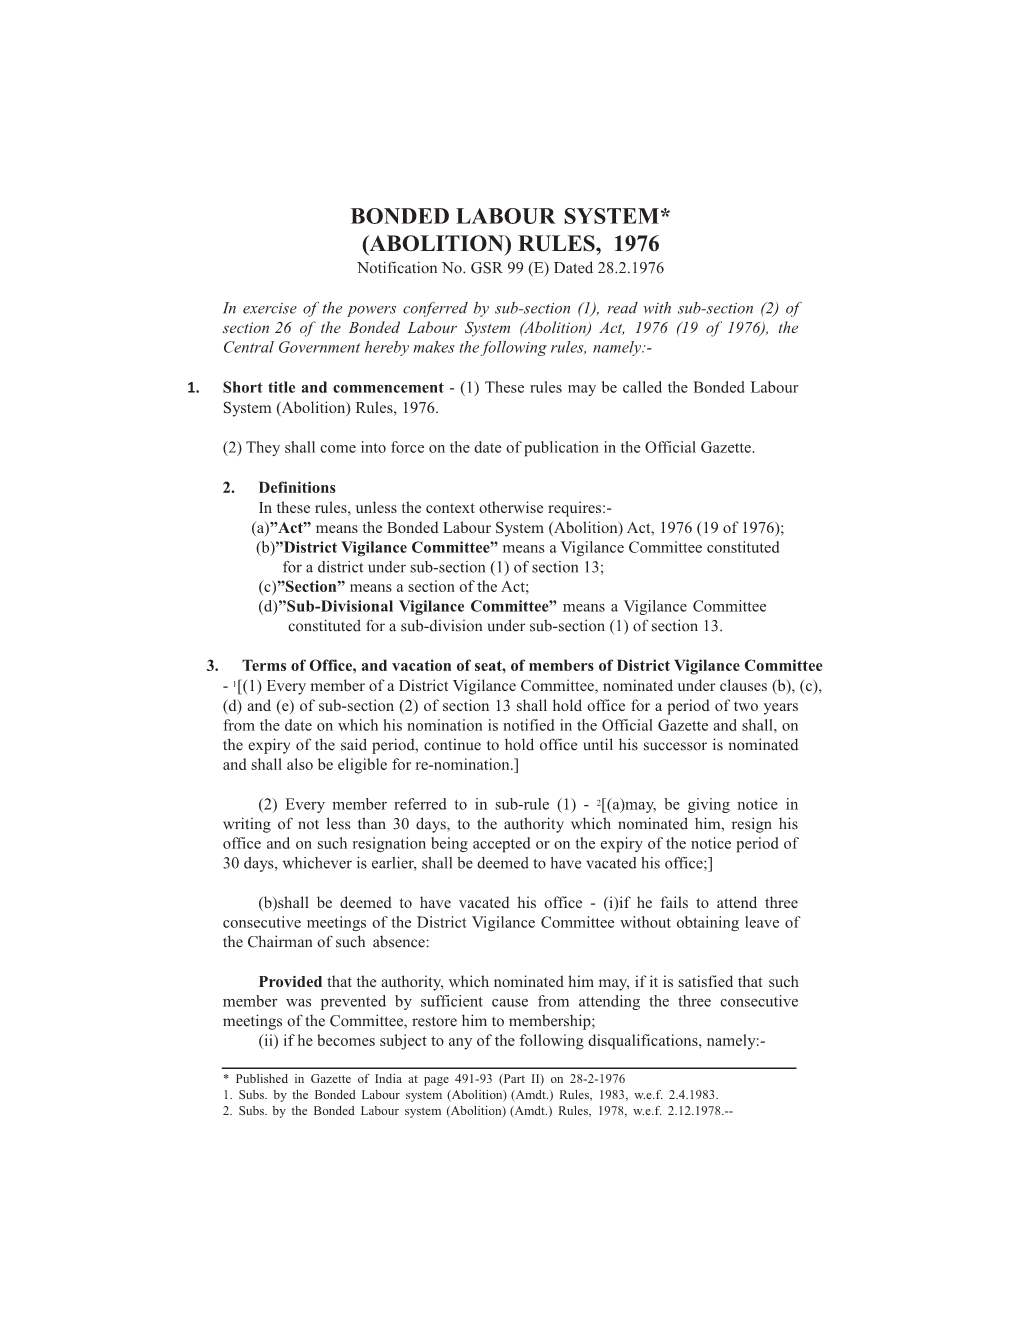 Bonded Laboursystem*(Abolition) Rules,1976